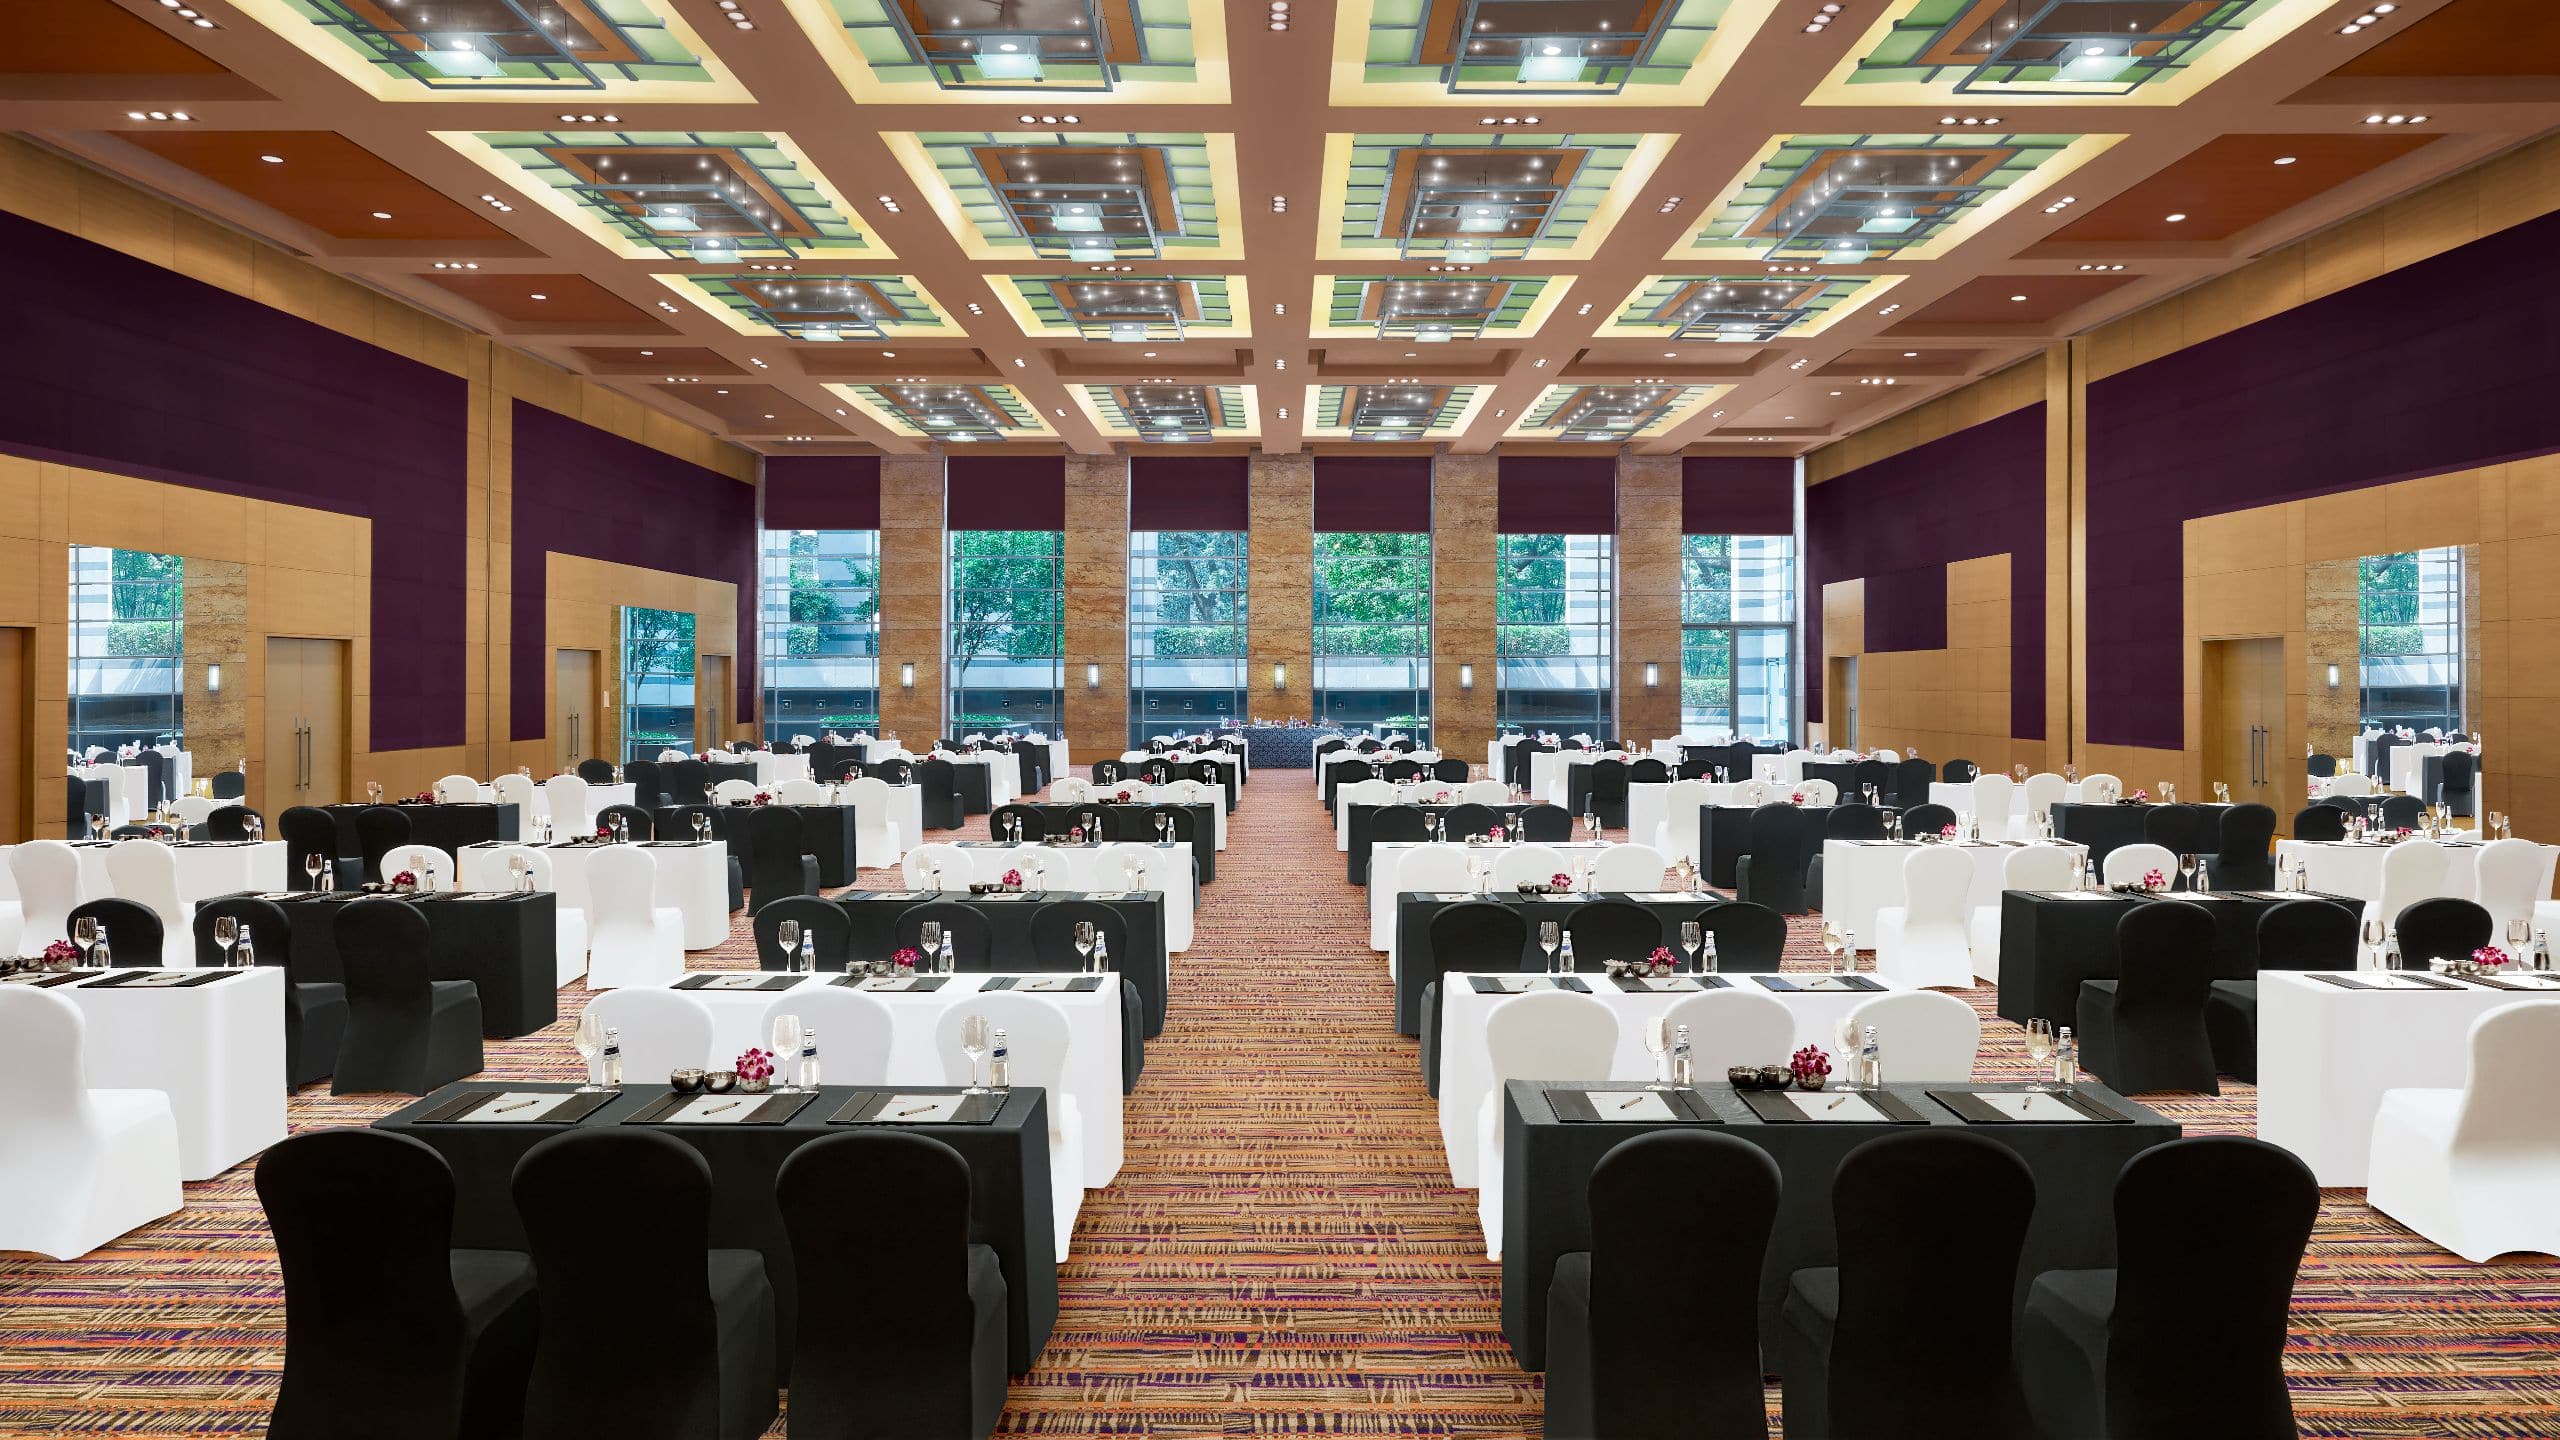 Grand Hyatt Mumbai Hotel & Residences Ballroom Classroom Tables Chairs